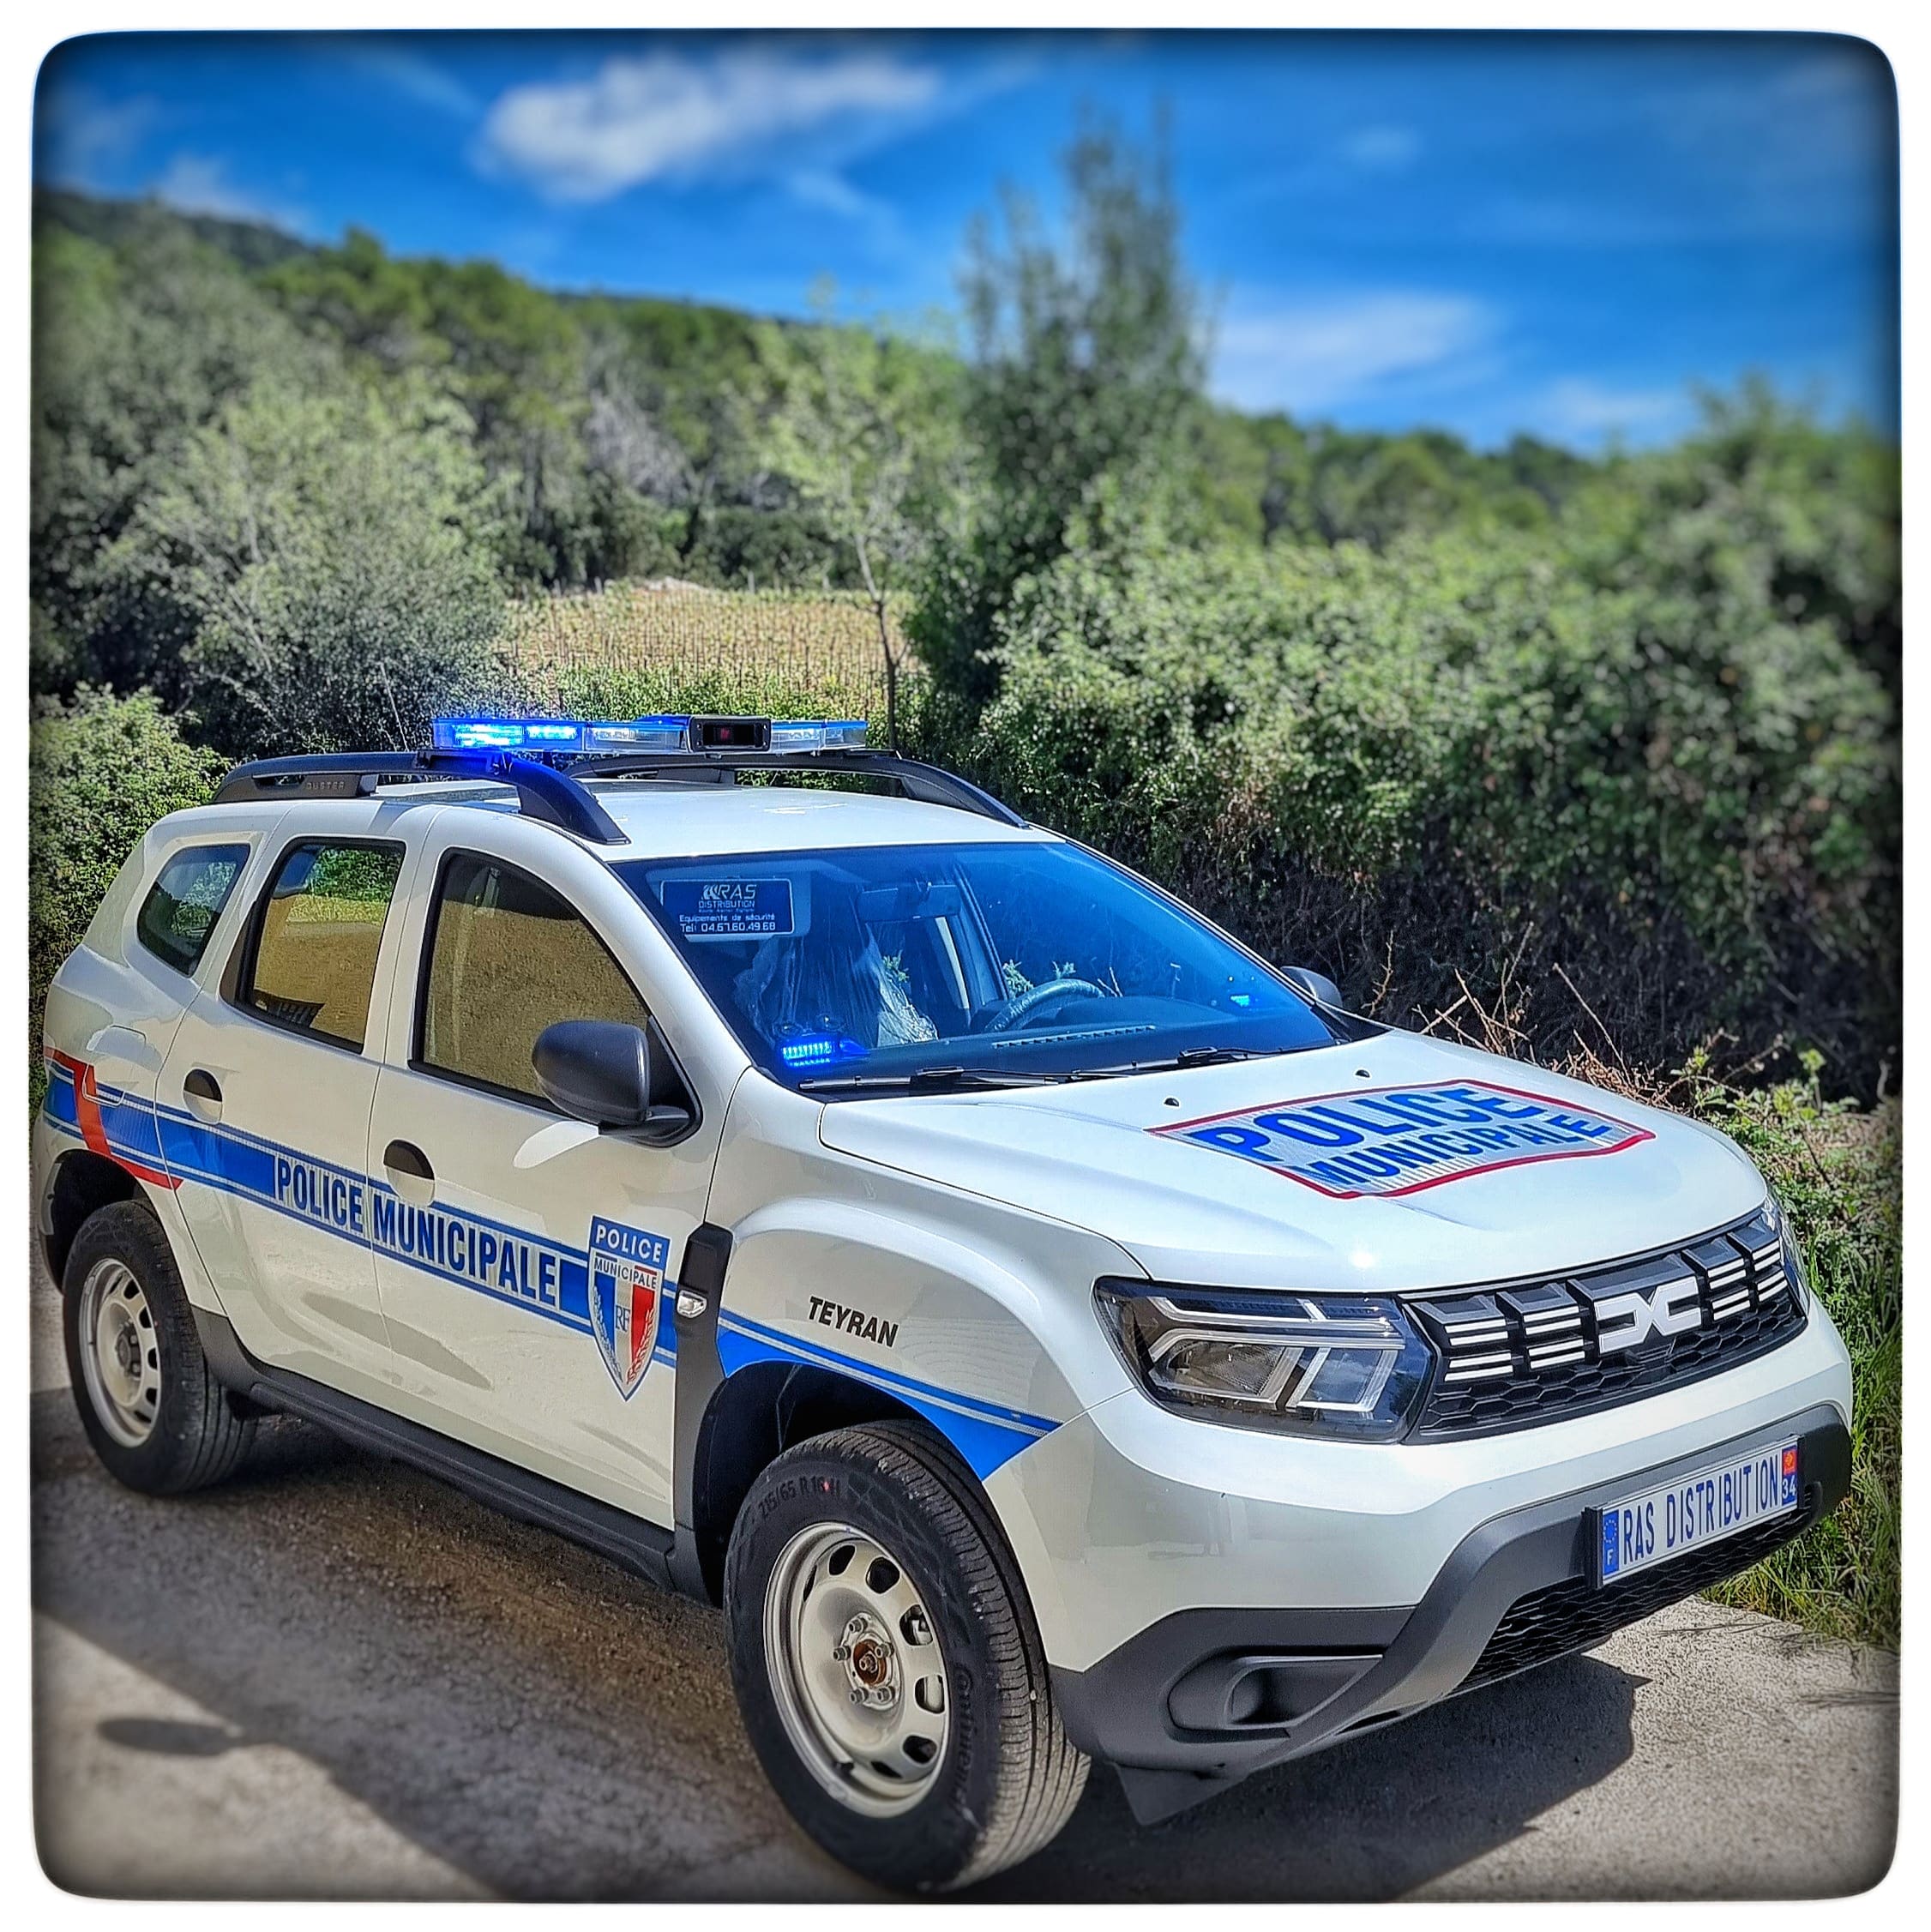 Dacia Duster Police Municipale Teyran RAS Distribution